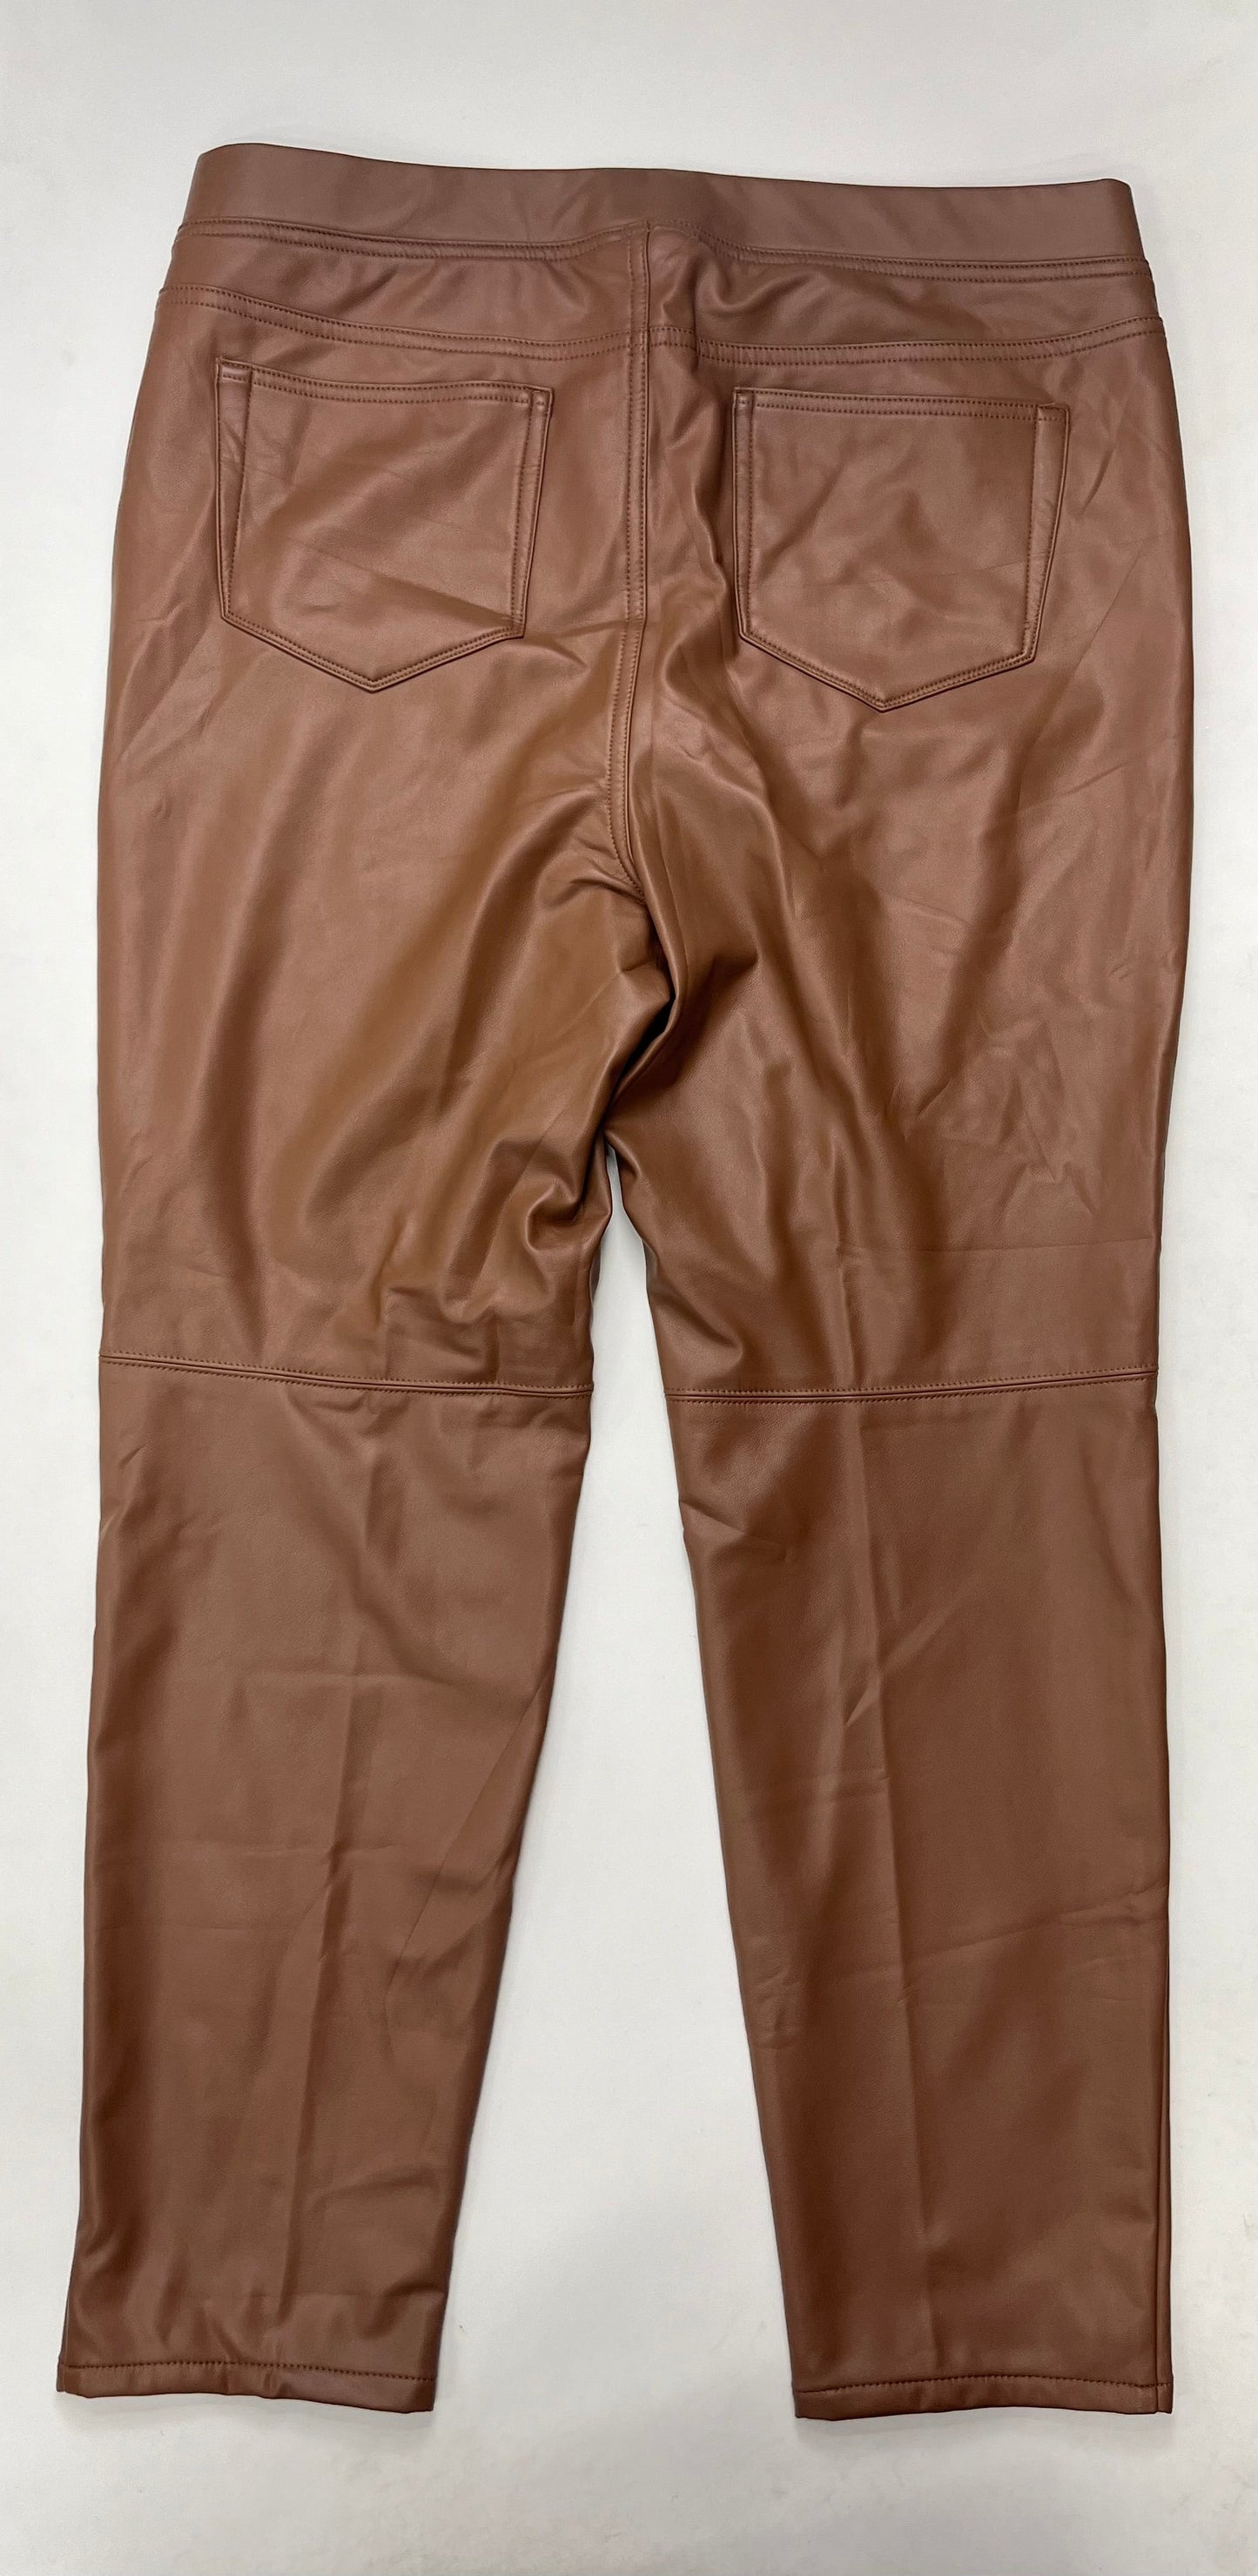 Brown Pants Work/dress J Jill NWT, Size 18